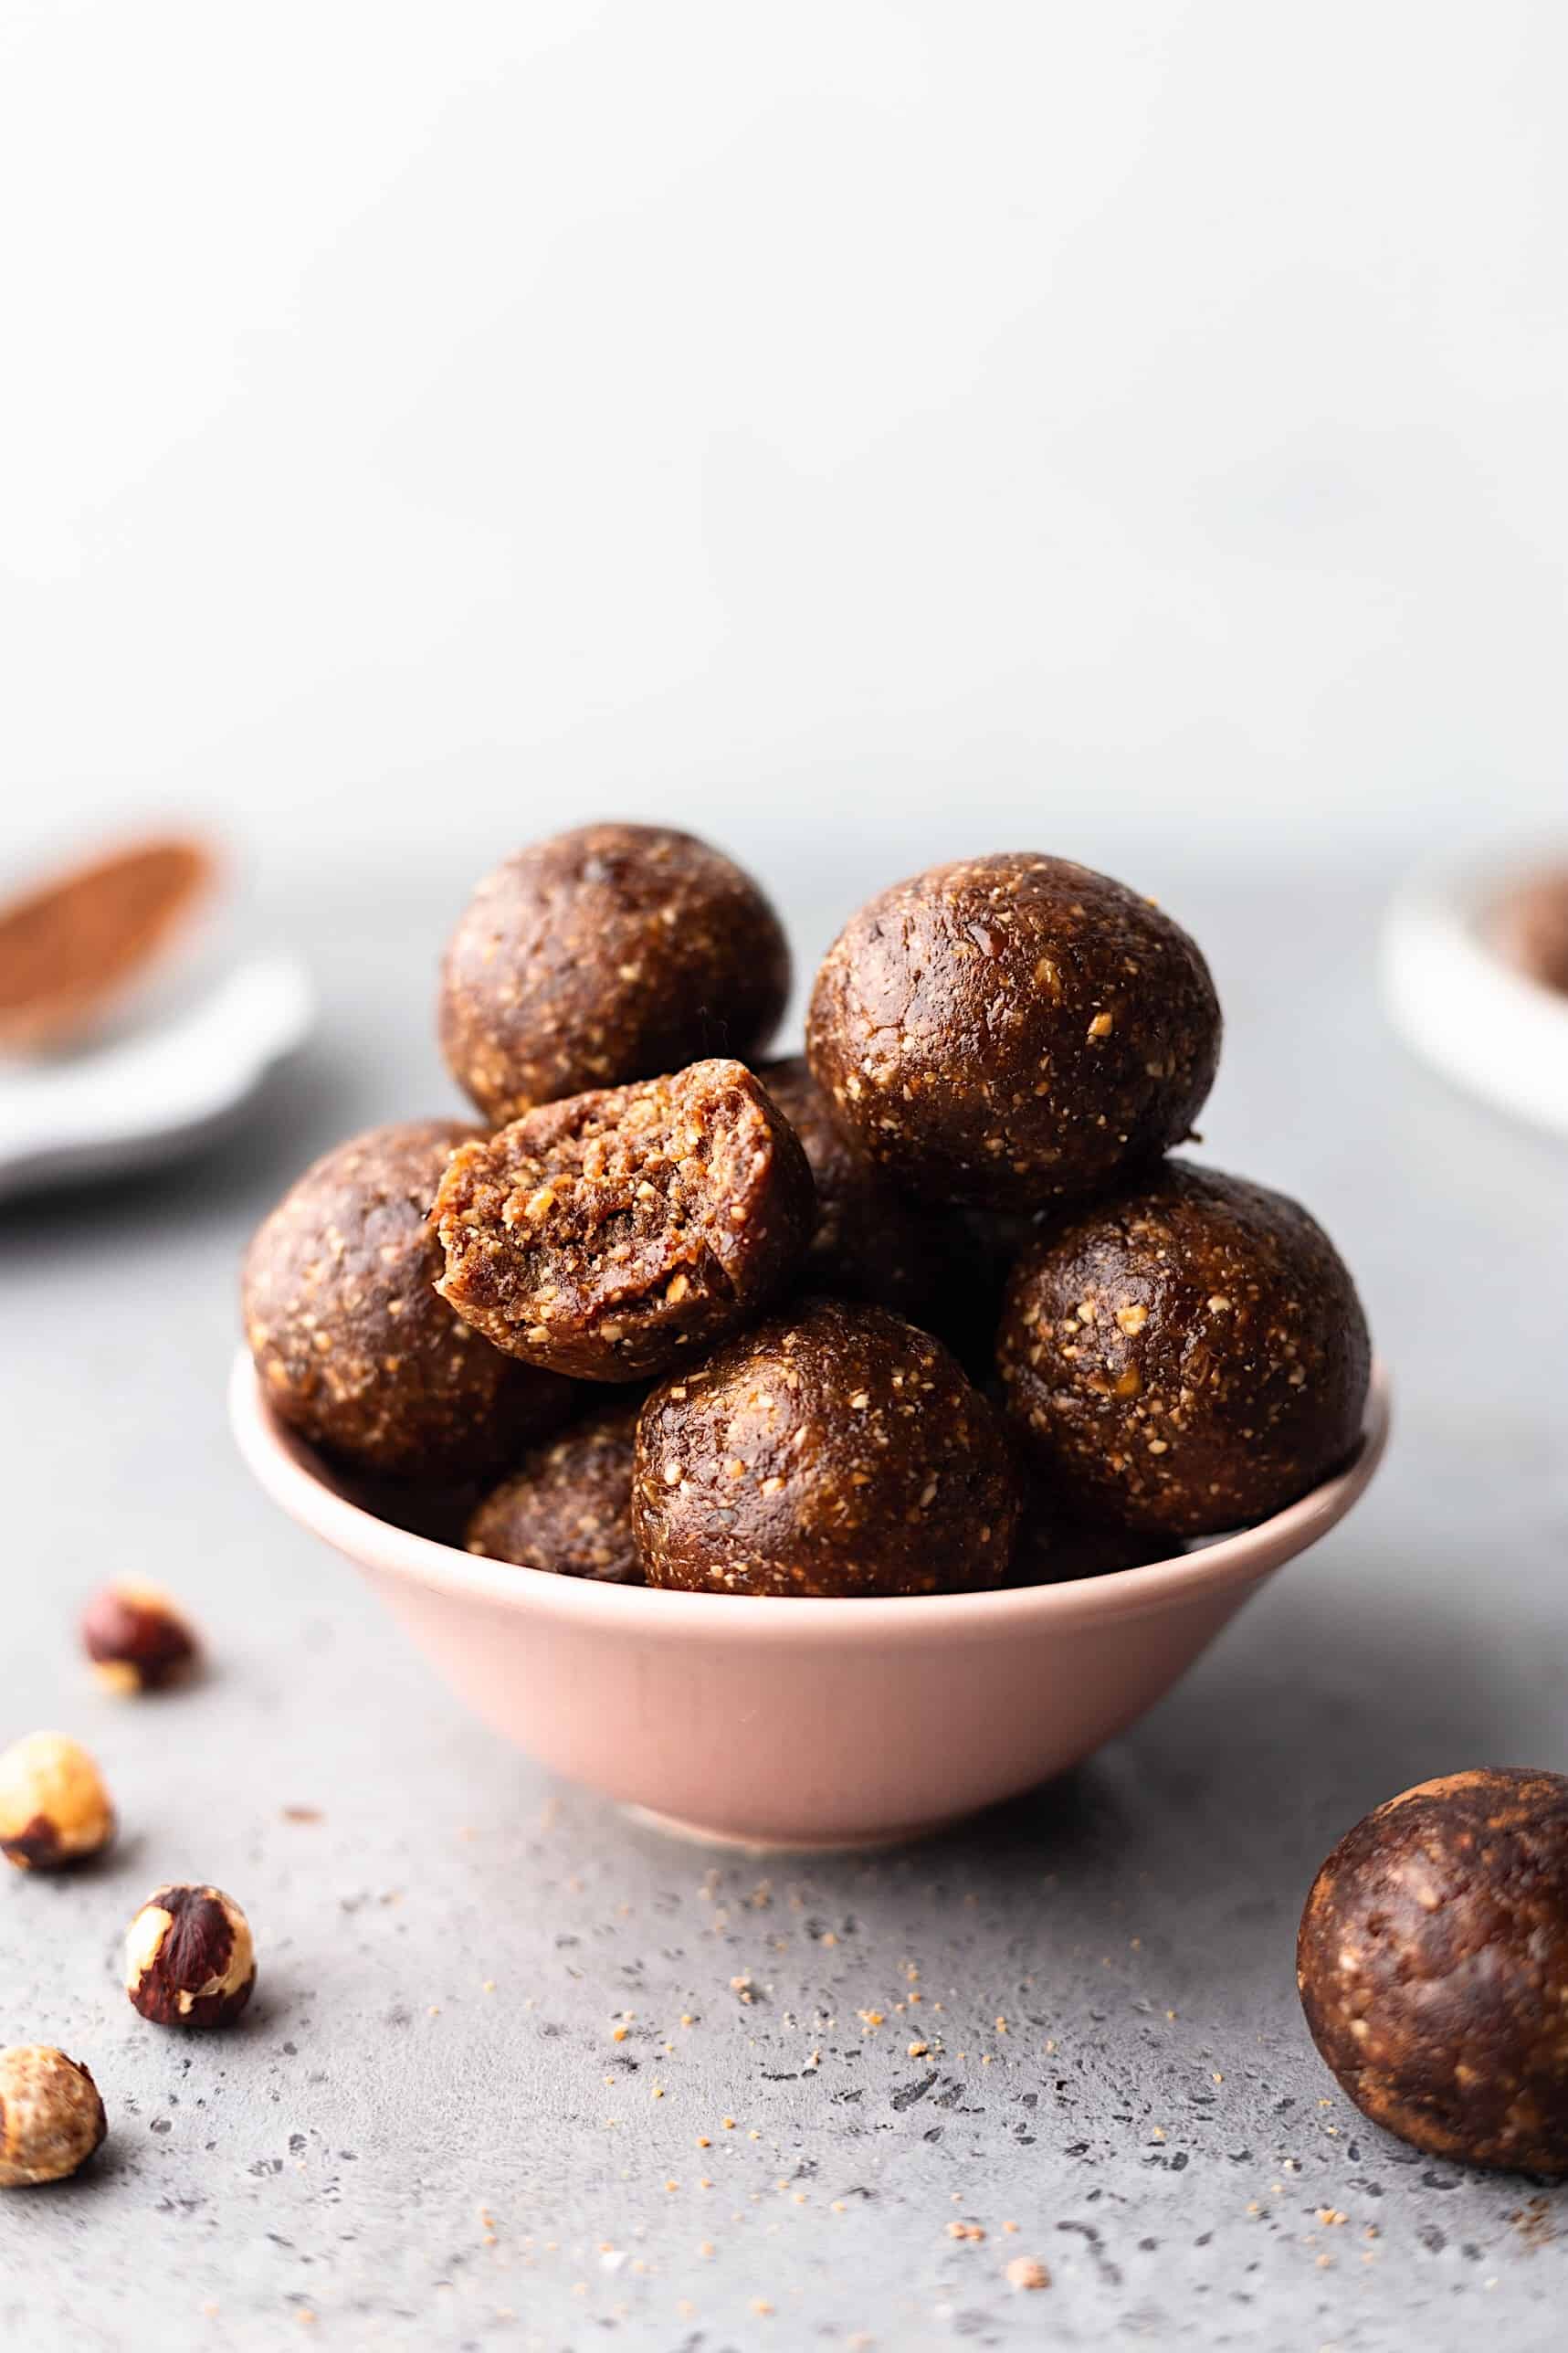 Vegan Chocolate Hazelnut Bliss Balls #recipe #vegan #energyball #chocolate #hazelnut